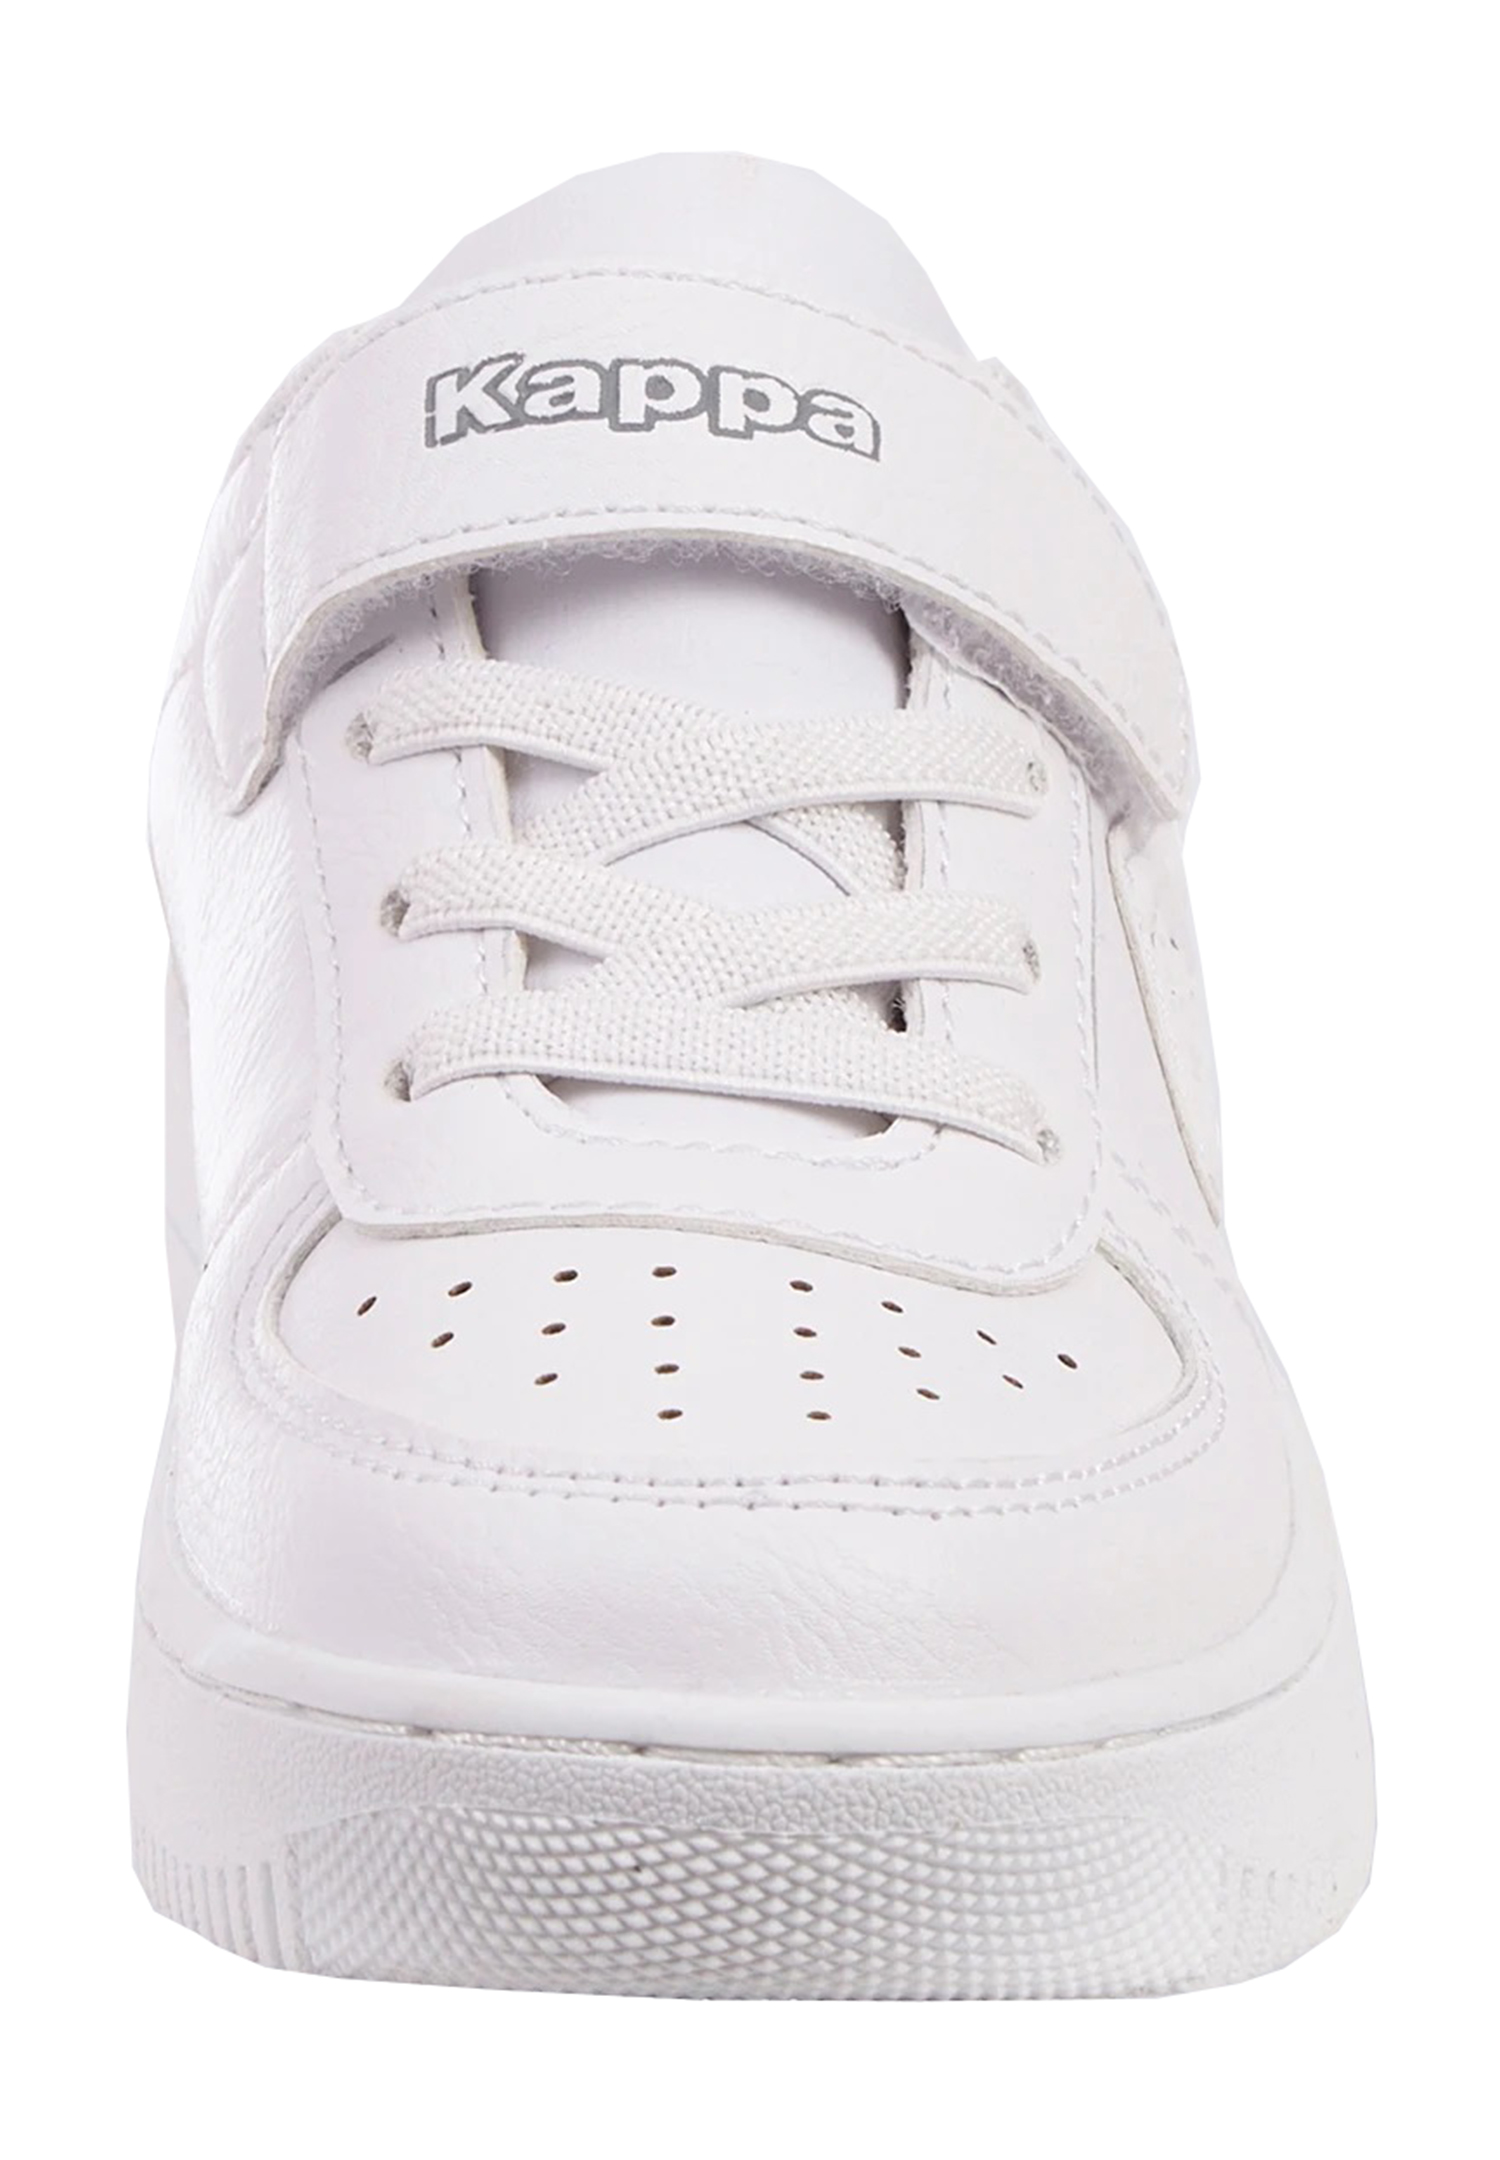 Kappa Unisex Kinder Sneaker Turnschuhe STYLECODE: 260852K weiss